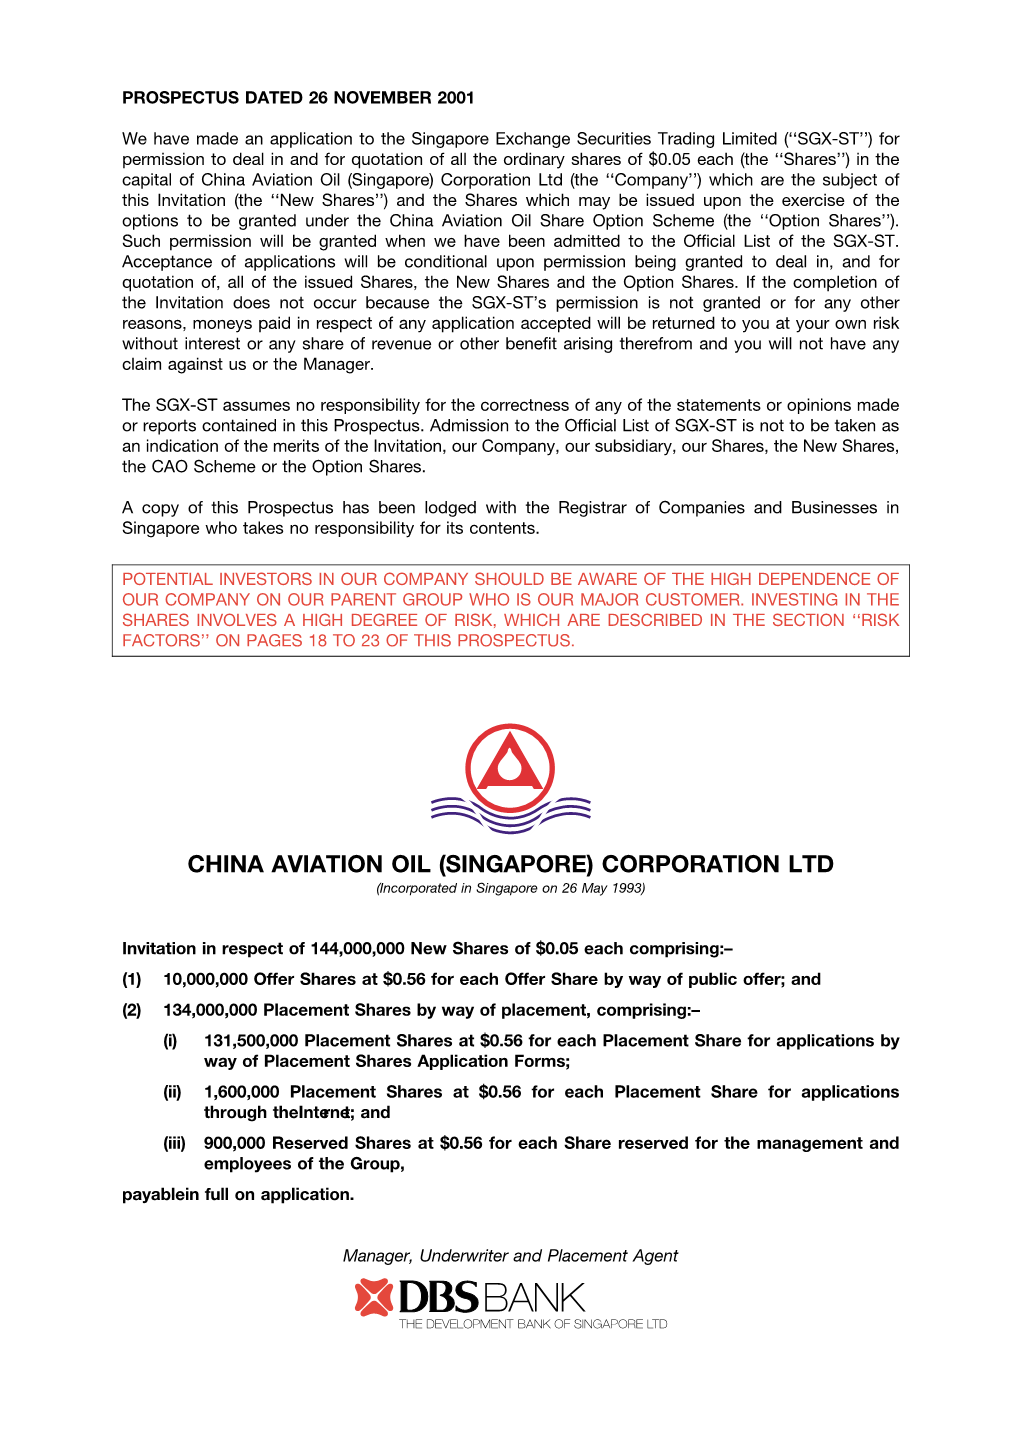 China Aviation Oil (Singapore) Corporation